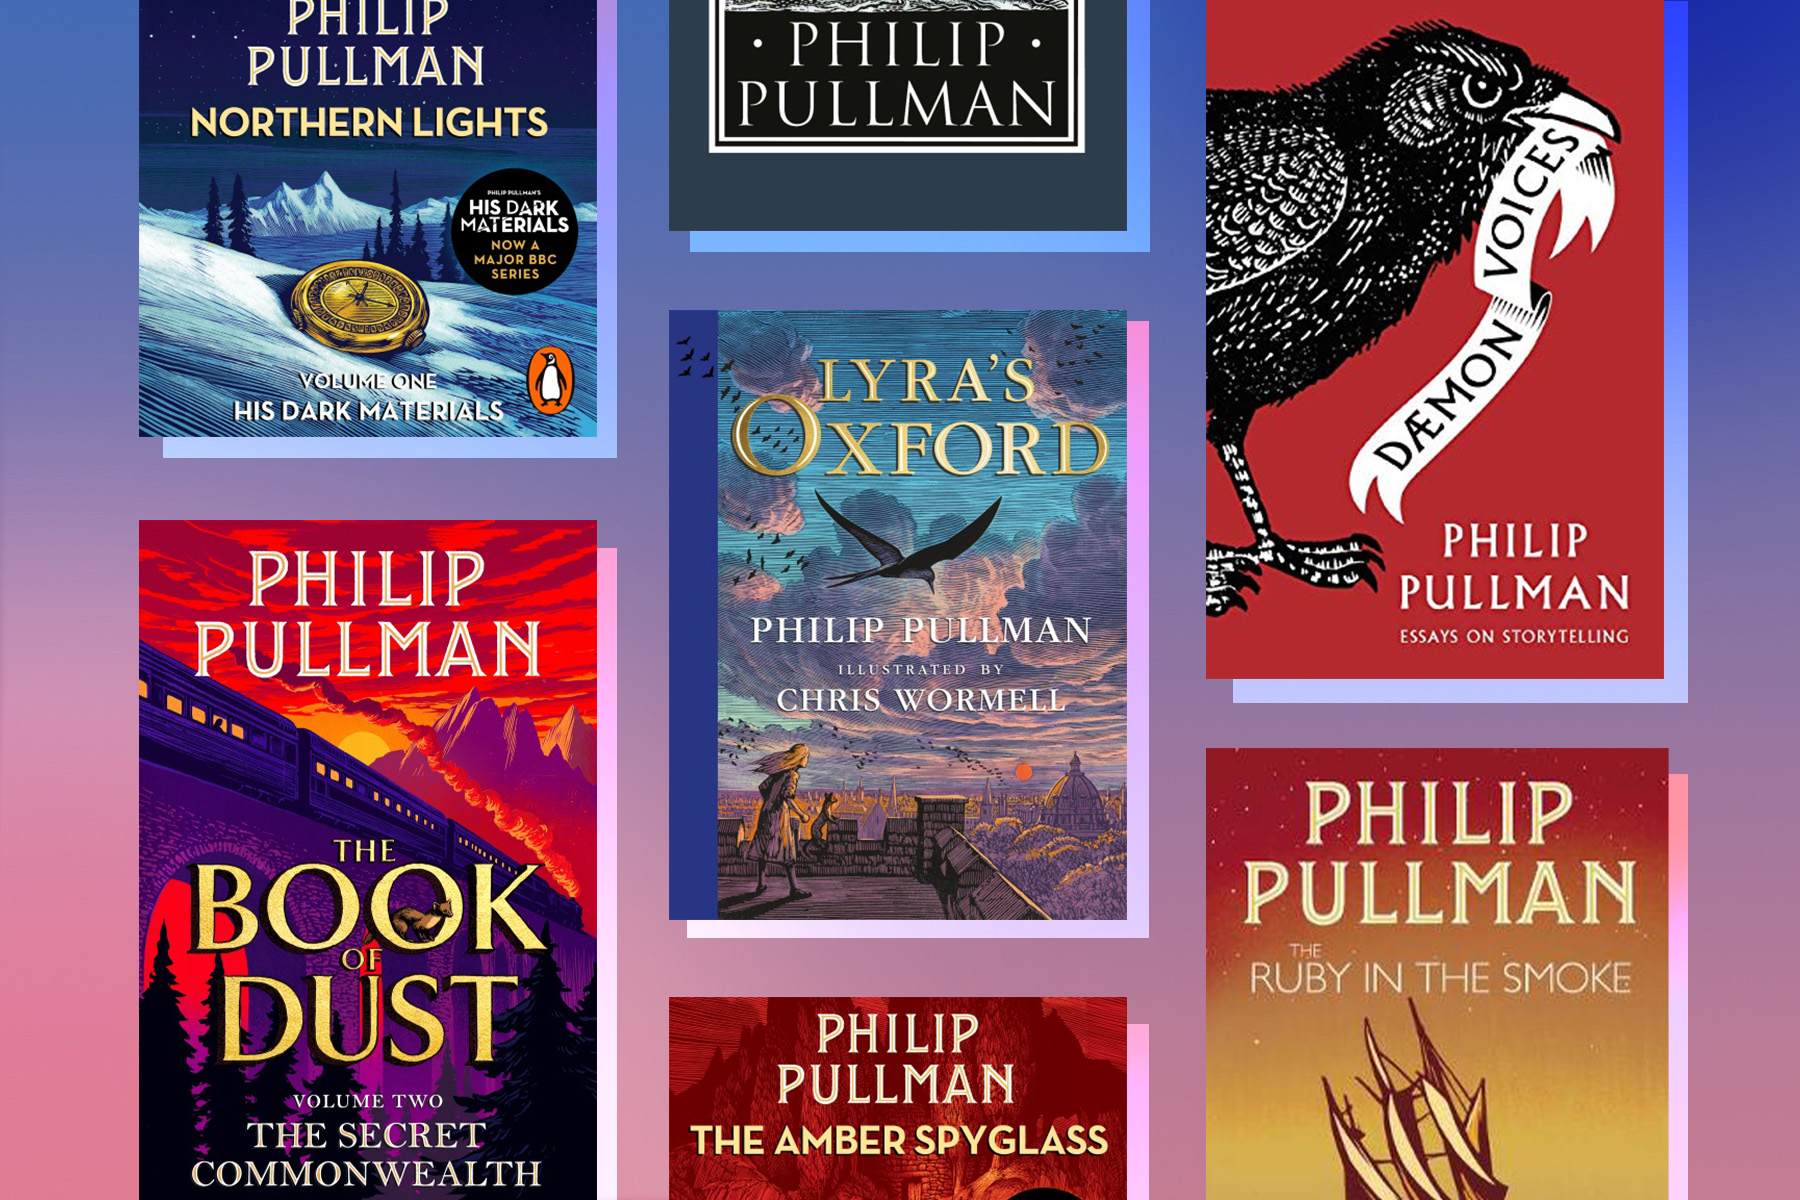 A flatlay of Philip Pullman books